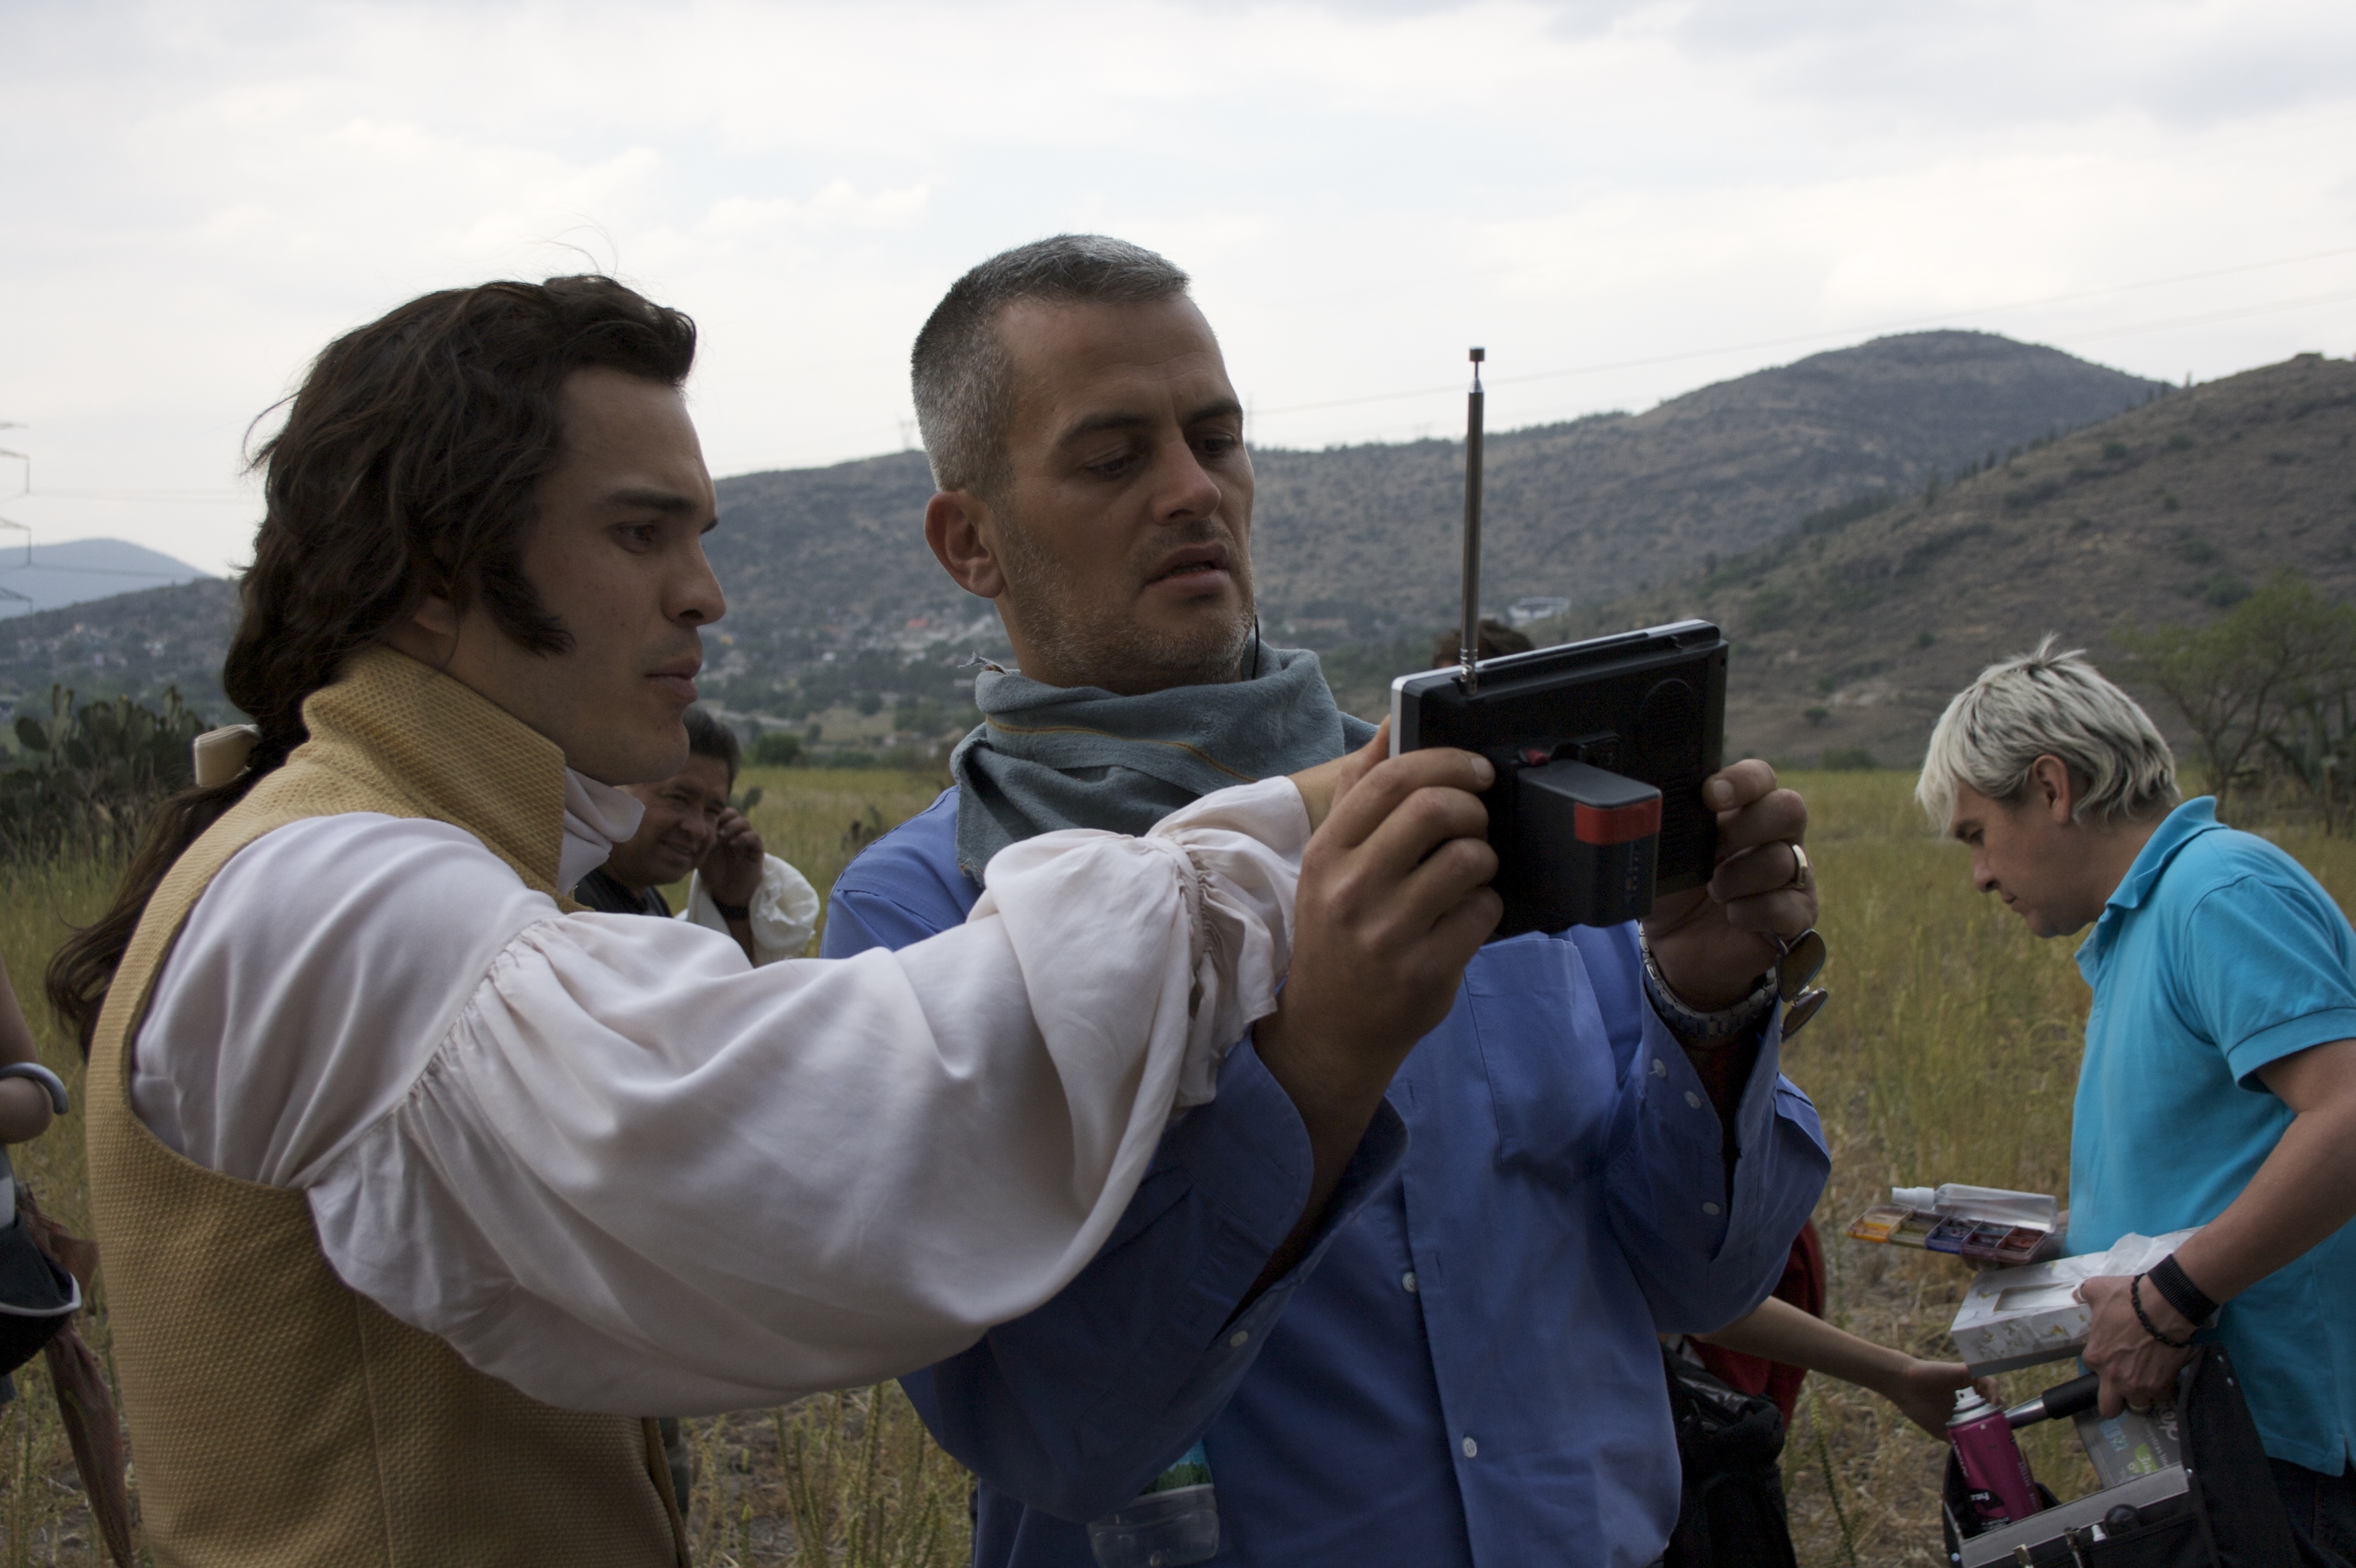 Actor Kuno Becker on location with film director Antonio Zavala Kugler. Source article: 